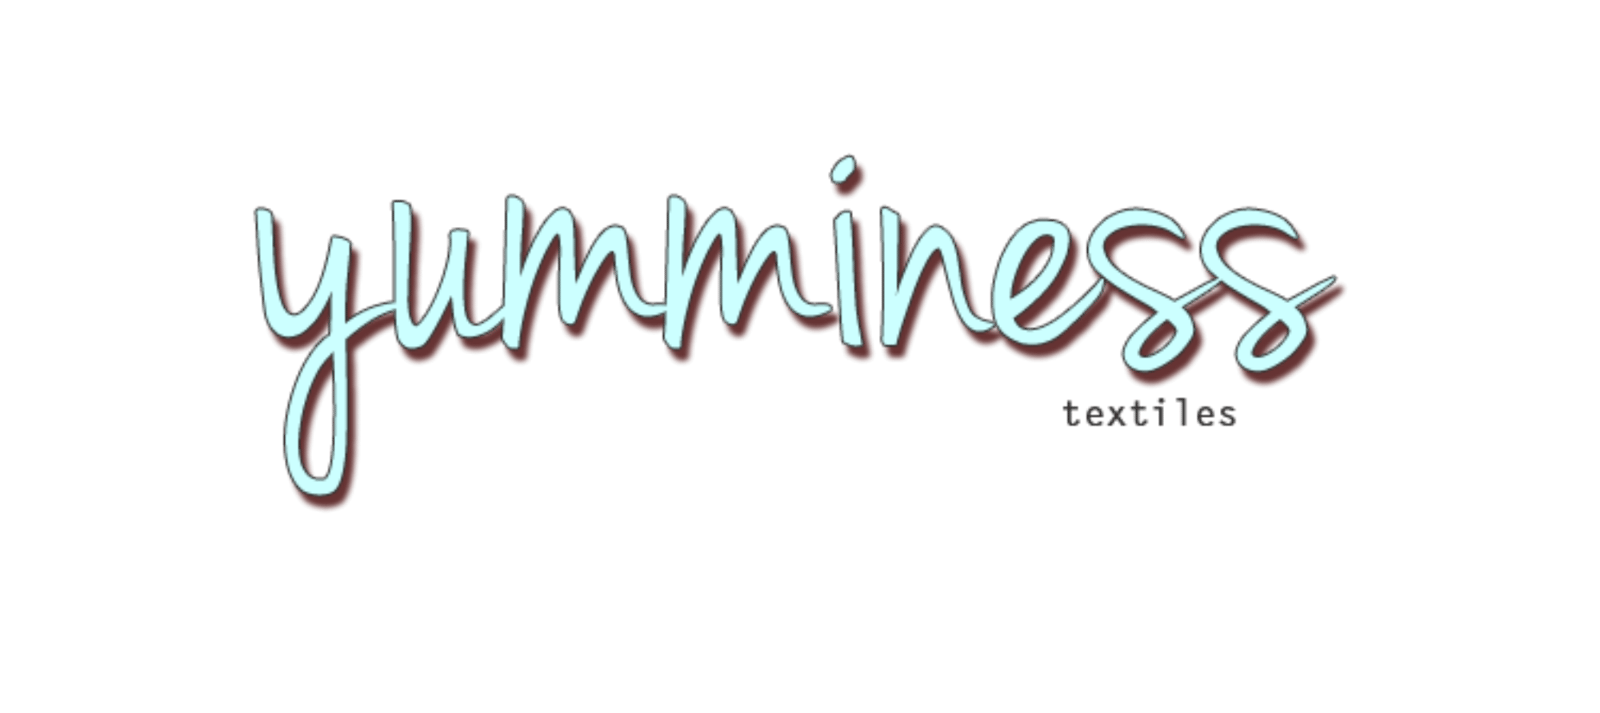 Yumminess textiles